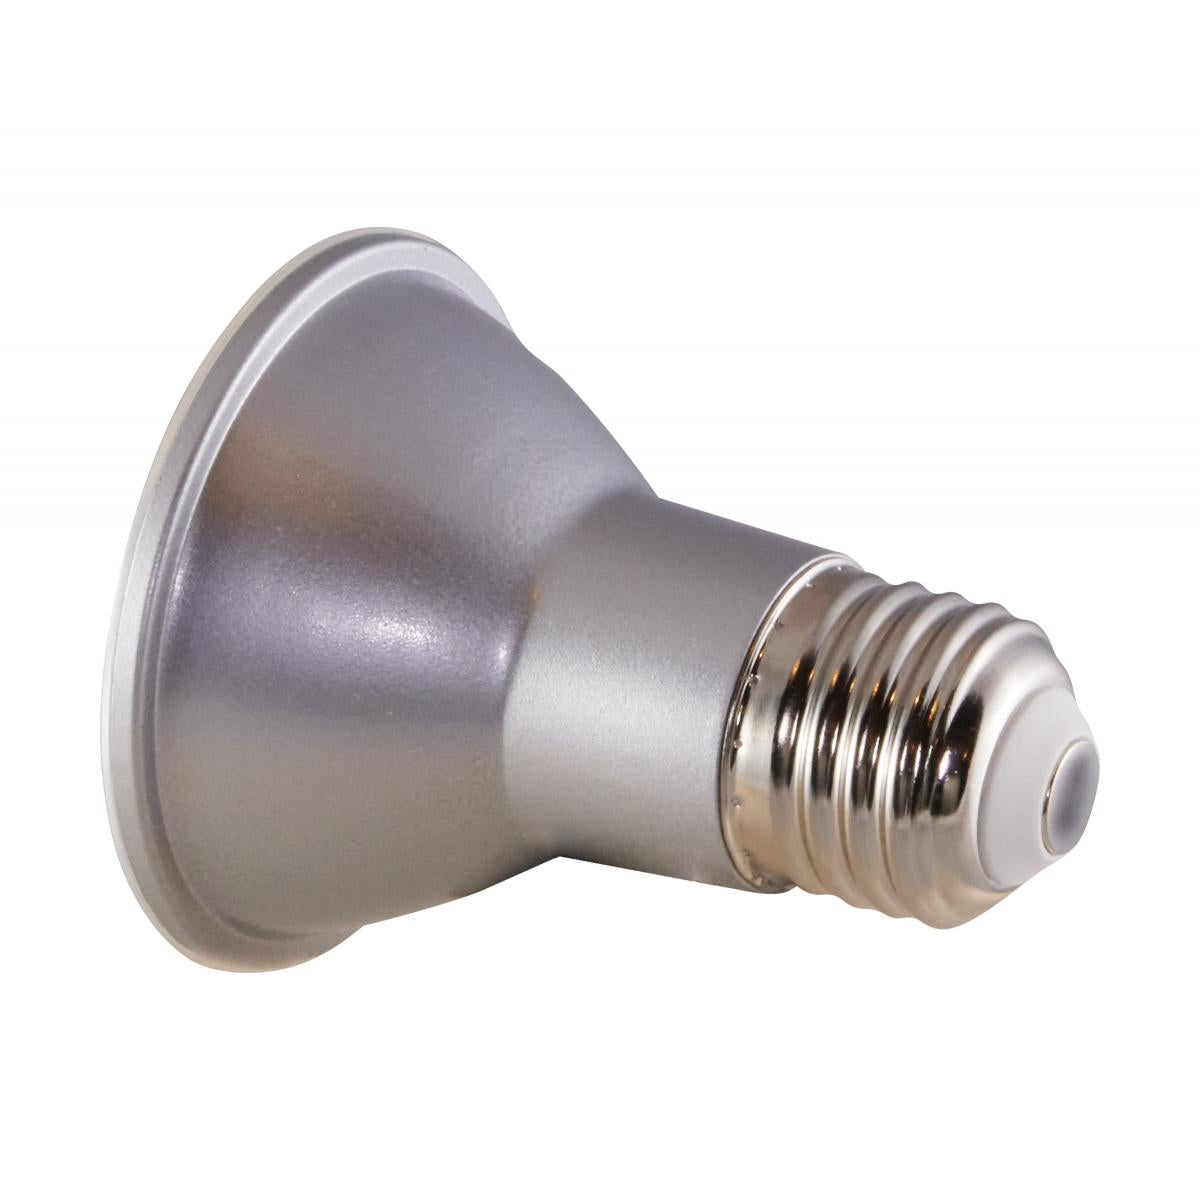 PAR20 Reflector LED Bulb, 6 watt, 520 Lumens, 5000K, E26 Medium Base, 40 Deg. Flood